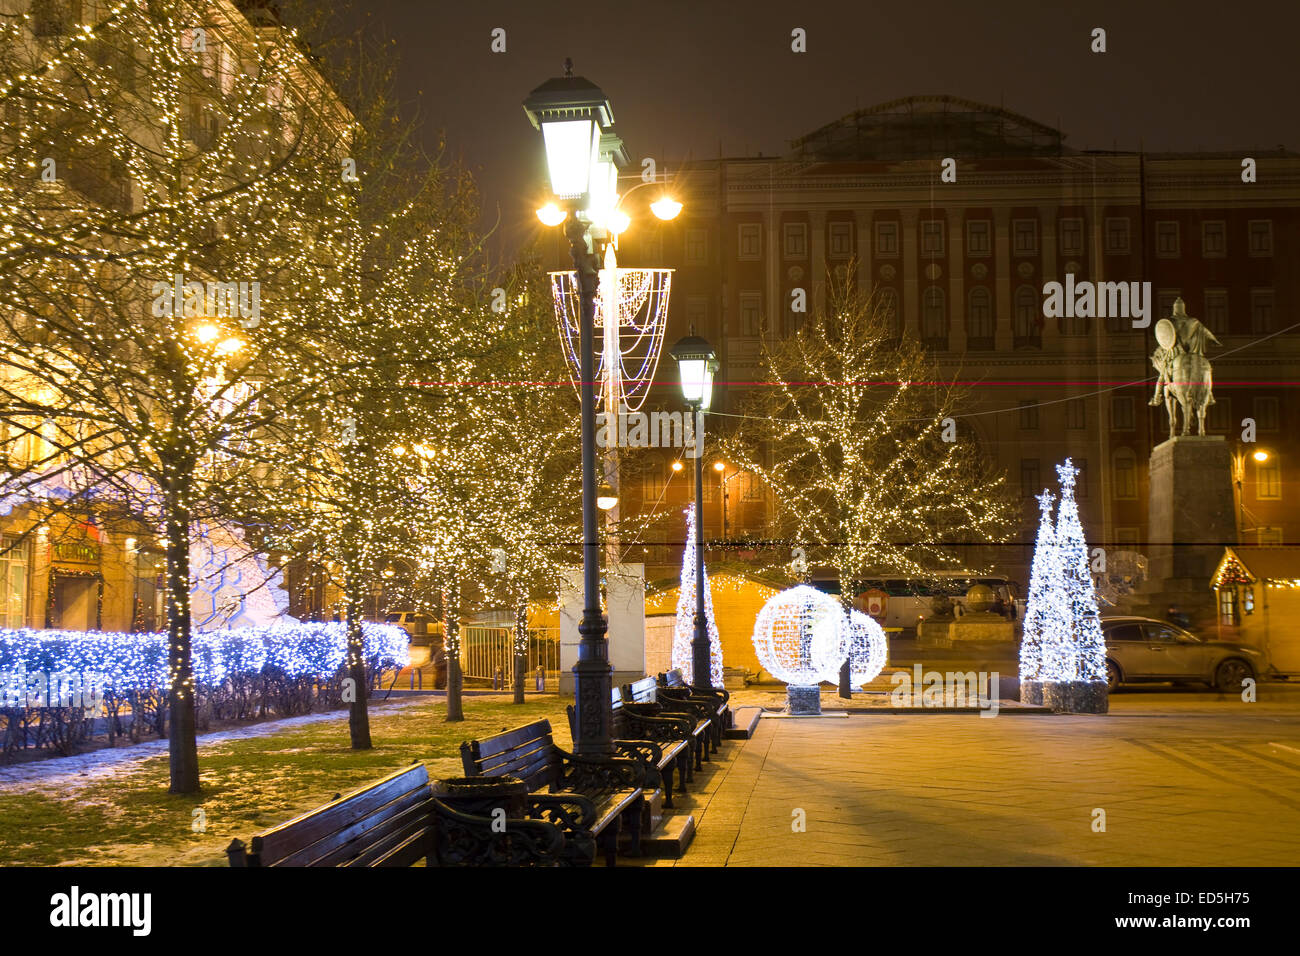 MOSCOW - DECEMBER 28, 2013: Tverskaya street illuminated for Christmas and New Year holidays, monument to king Yuriy Dolgorukiy Stock Photo